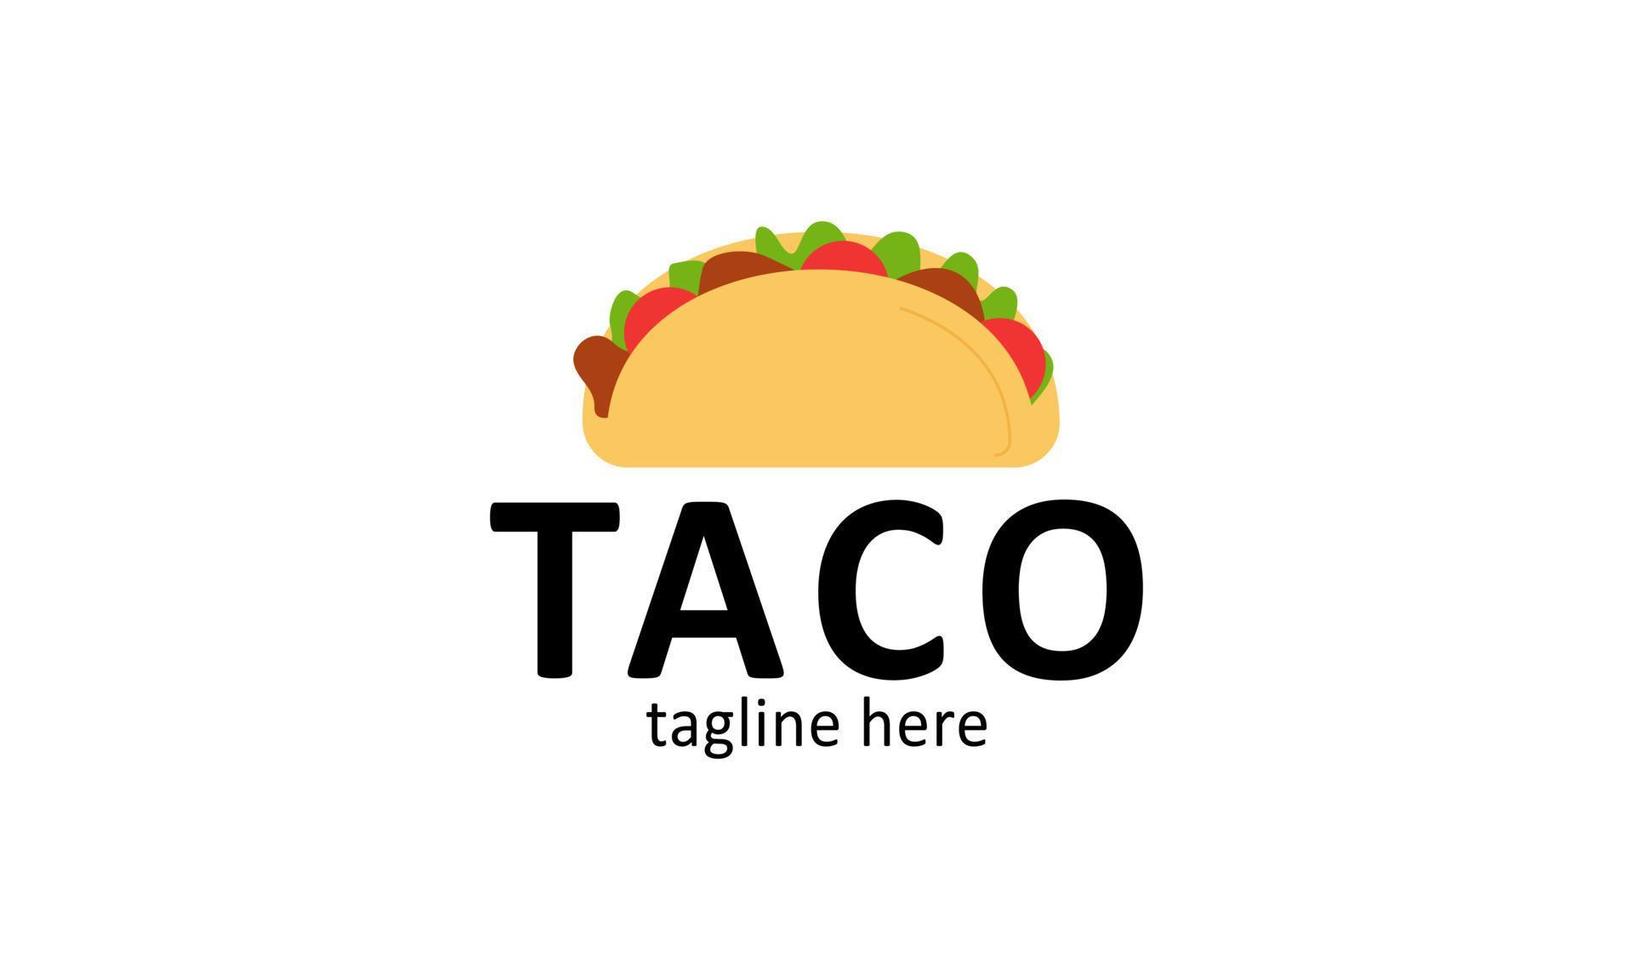 Taco mascot cartoon vector icon illustration. Cute Taco Kid Character With Bell